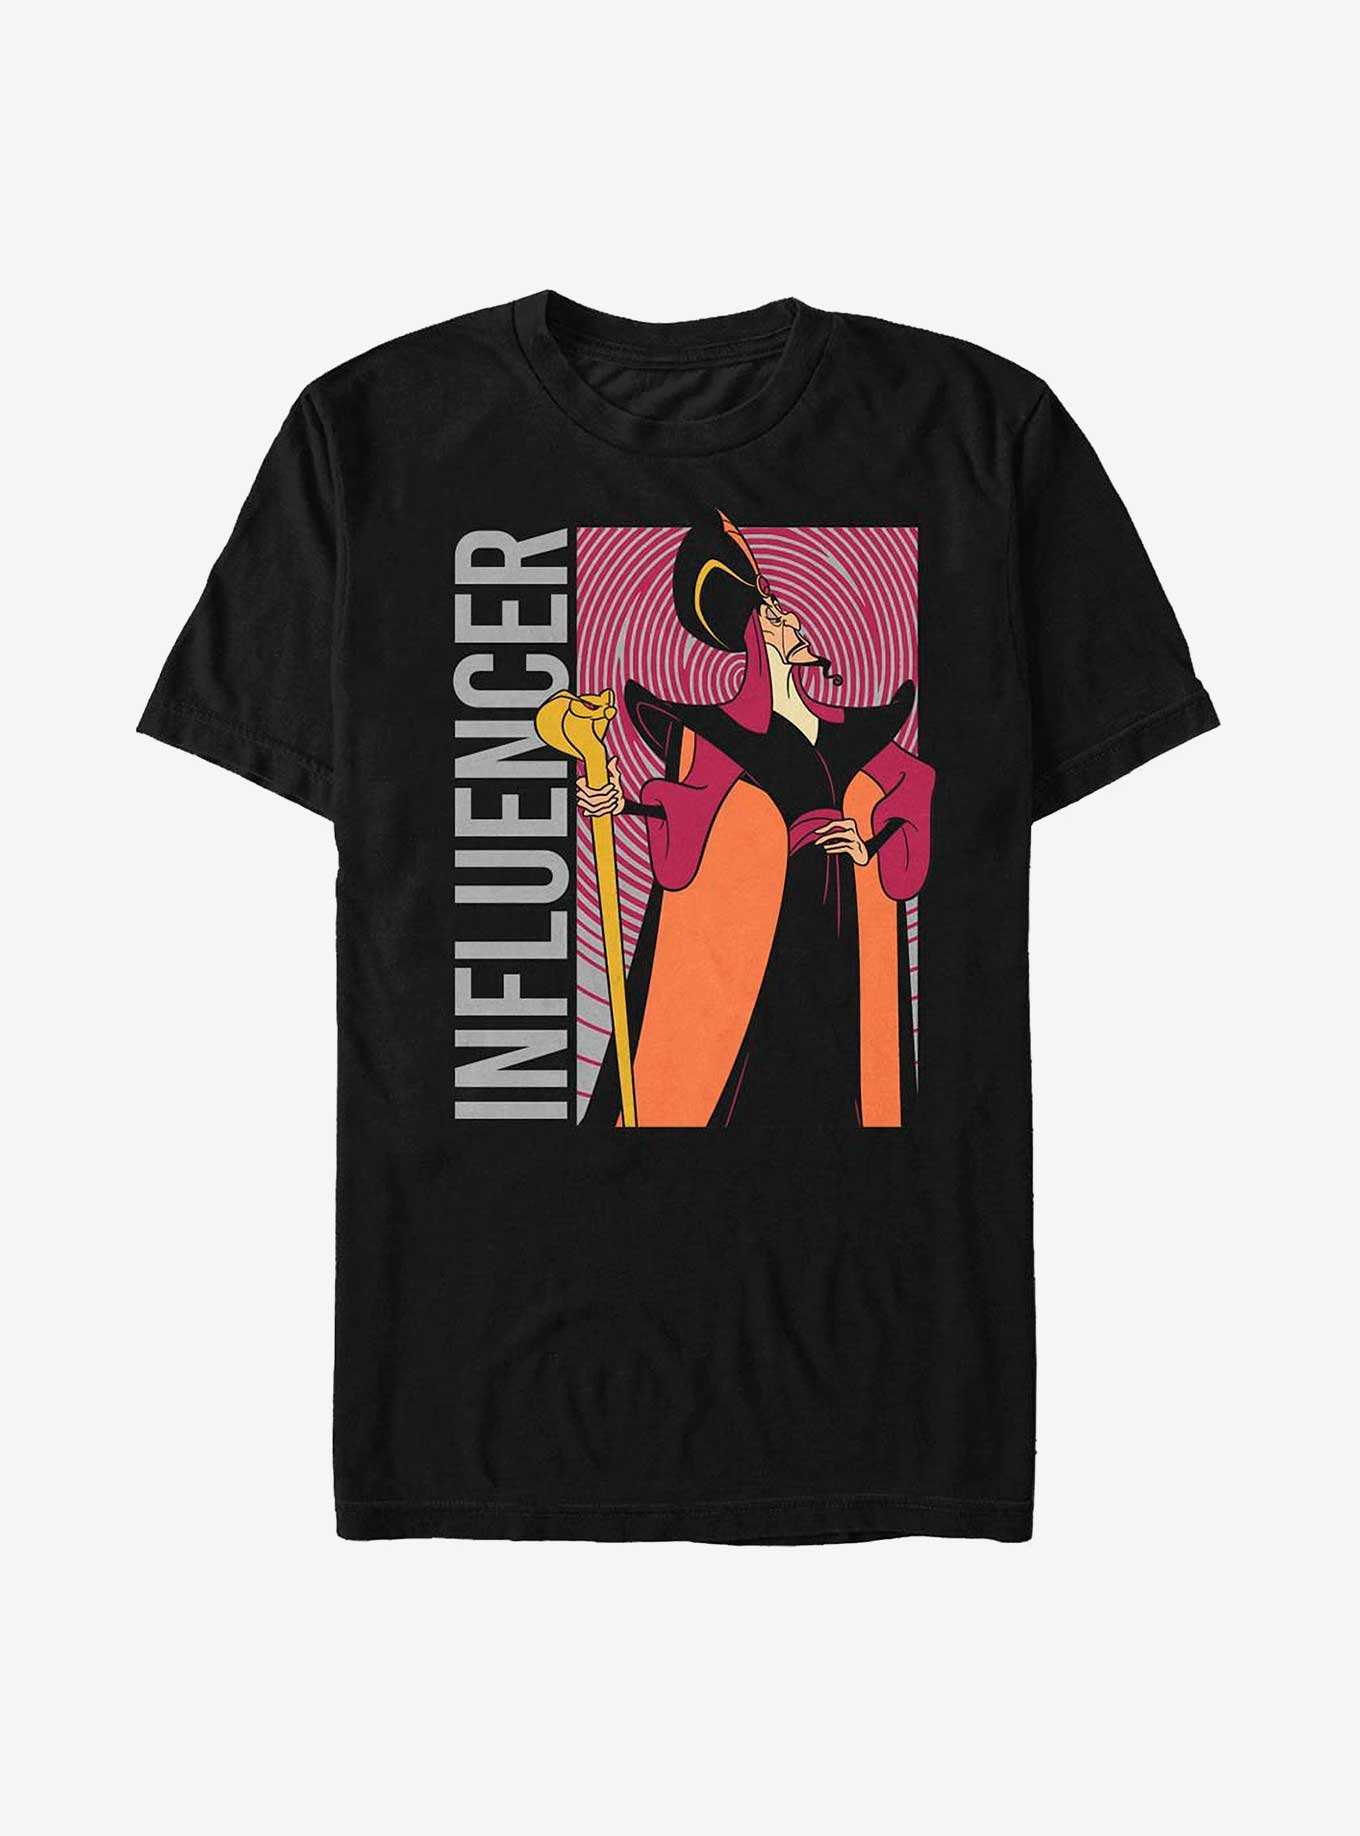 Disney Villains Jafar Influencer T-Shirt, , hi-res